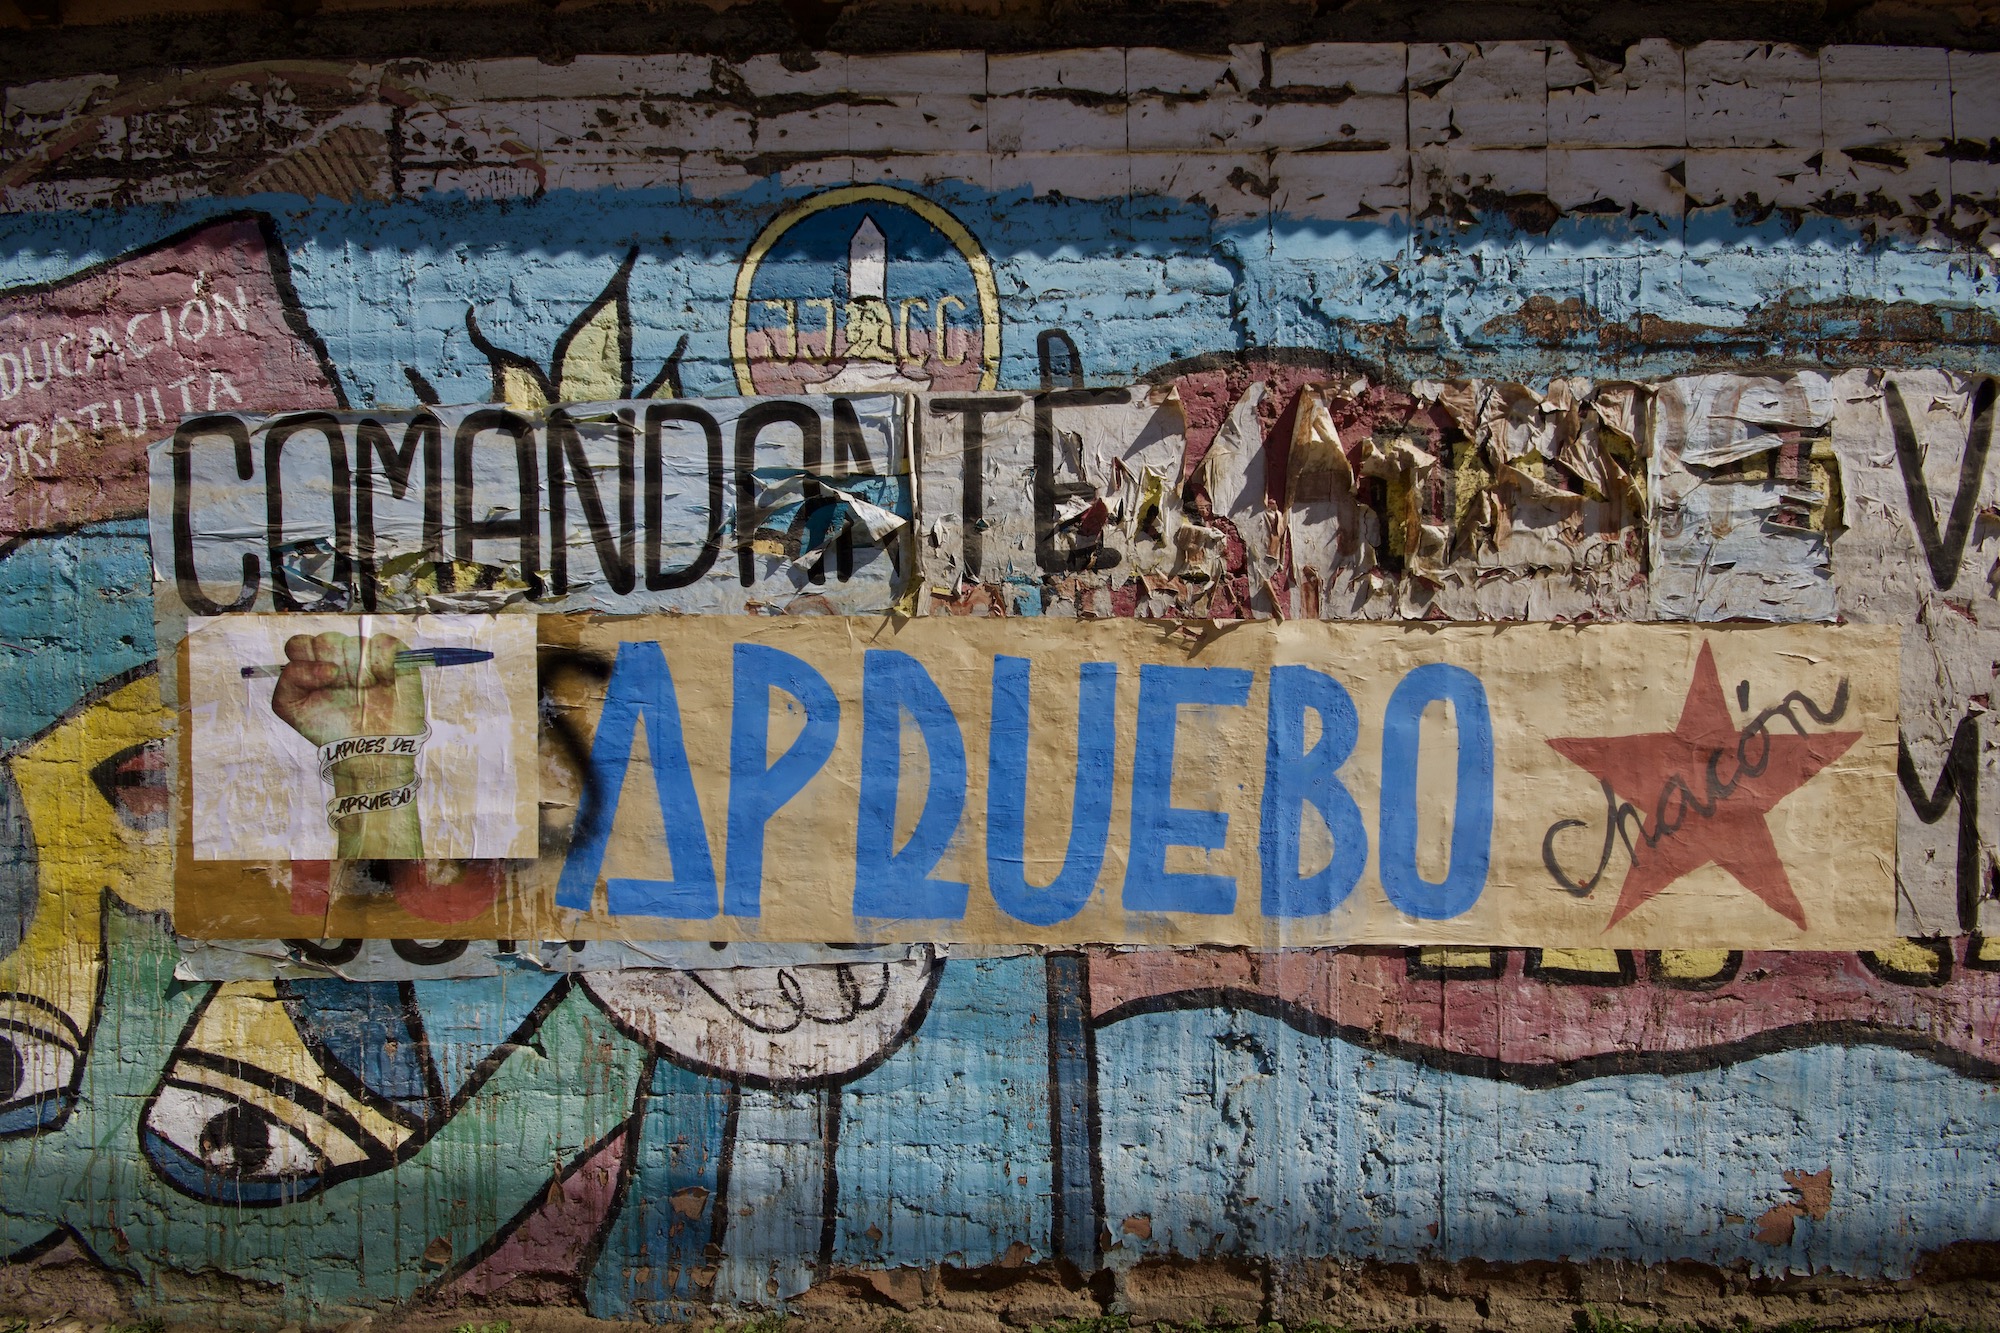 Mural that says "apuebo"